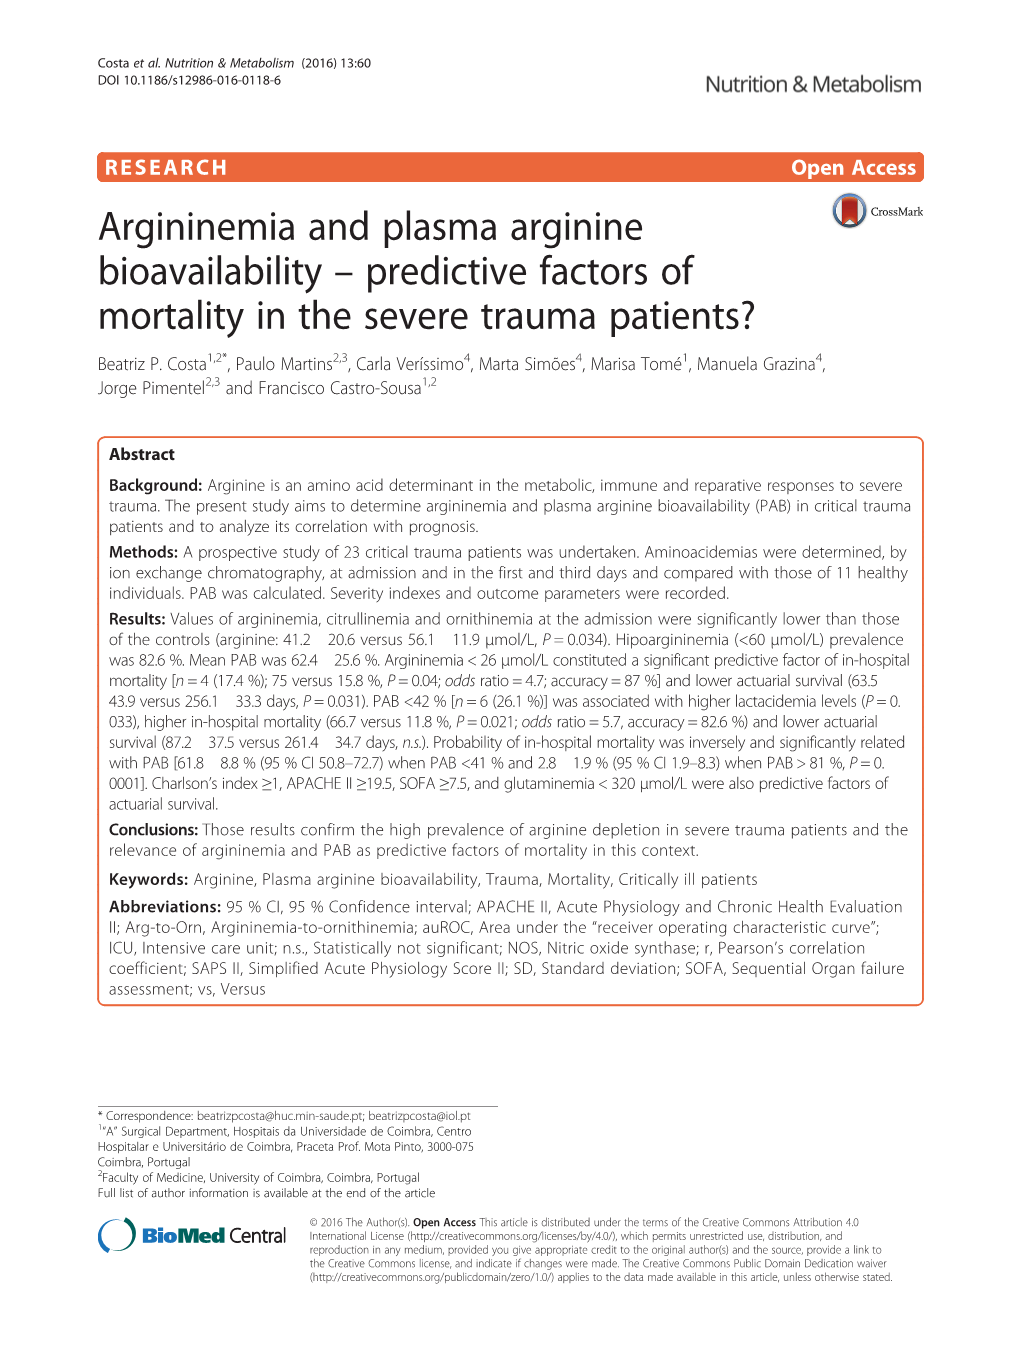 Argininemia and Plasma Arginine Bioavailability – Predictive Factors of Mortality in the Severe Trauma Patients? Beatriz P